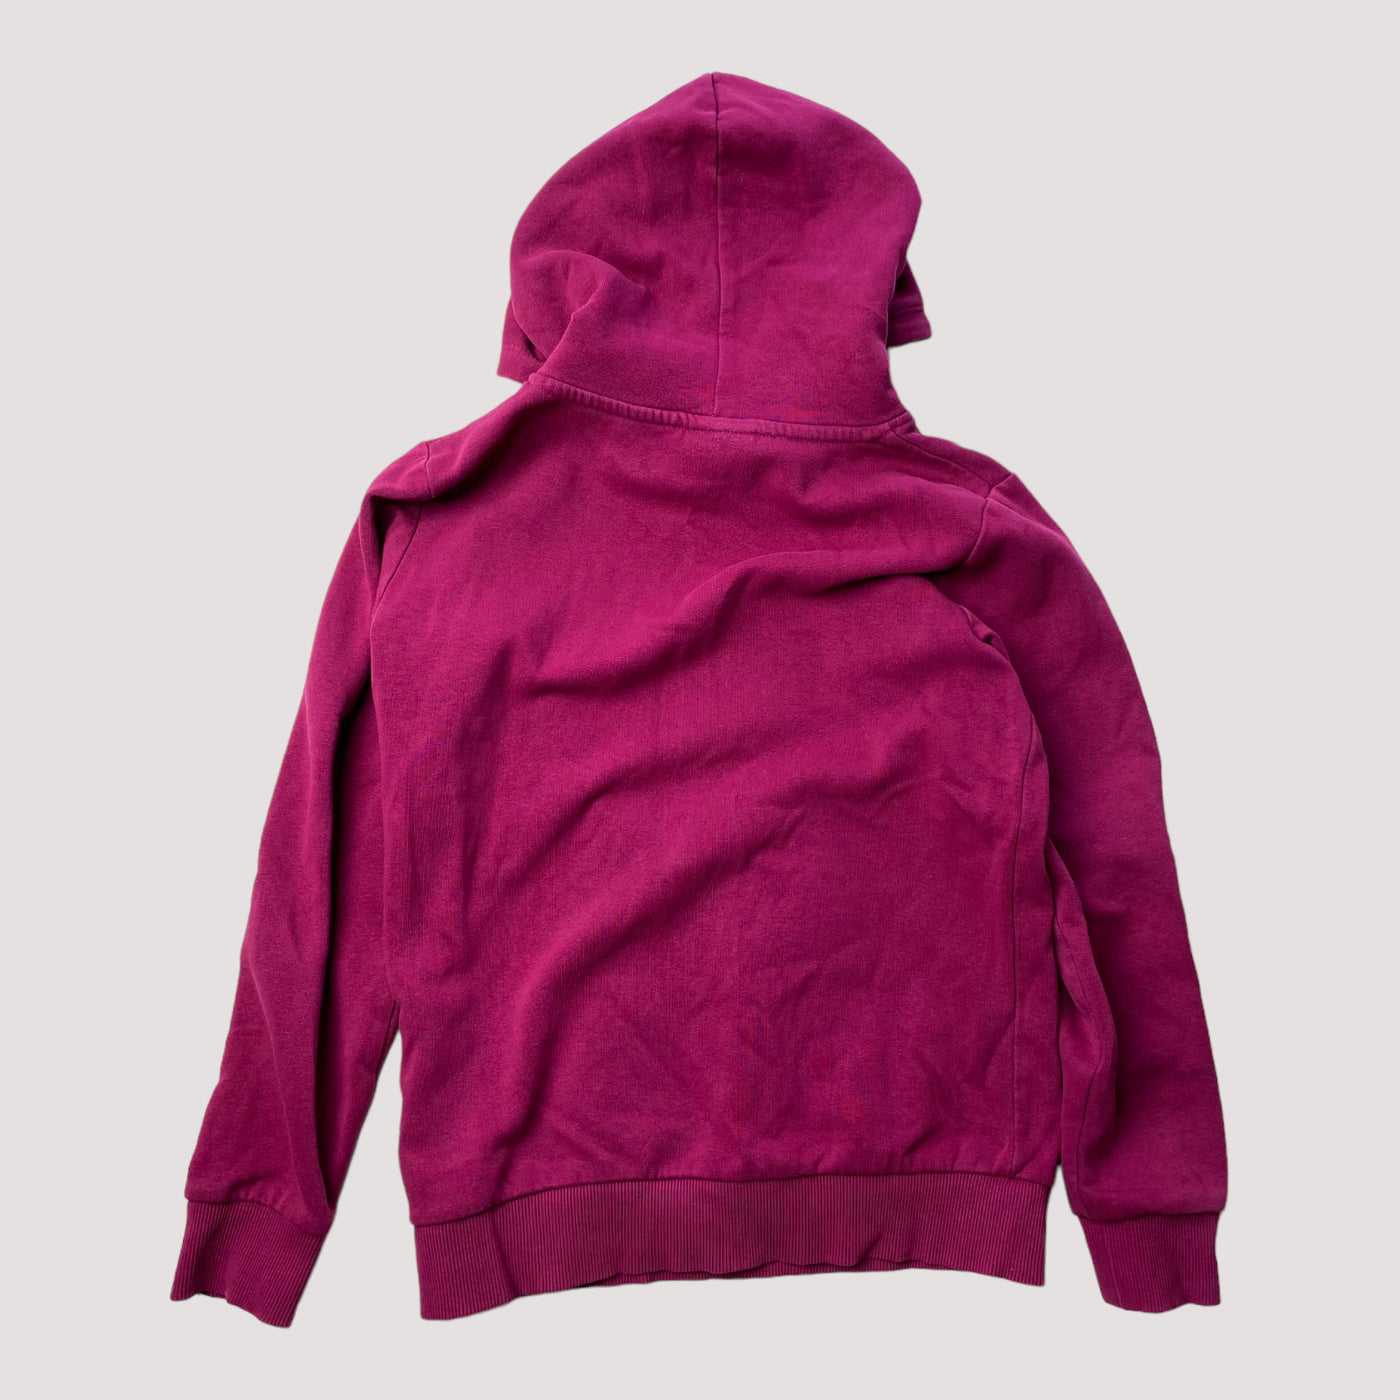 Peak Performance sweat hoodie, purple | 150cm